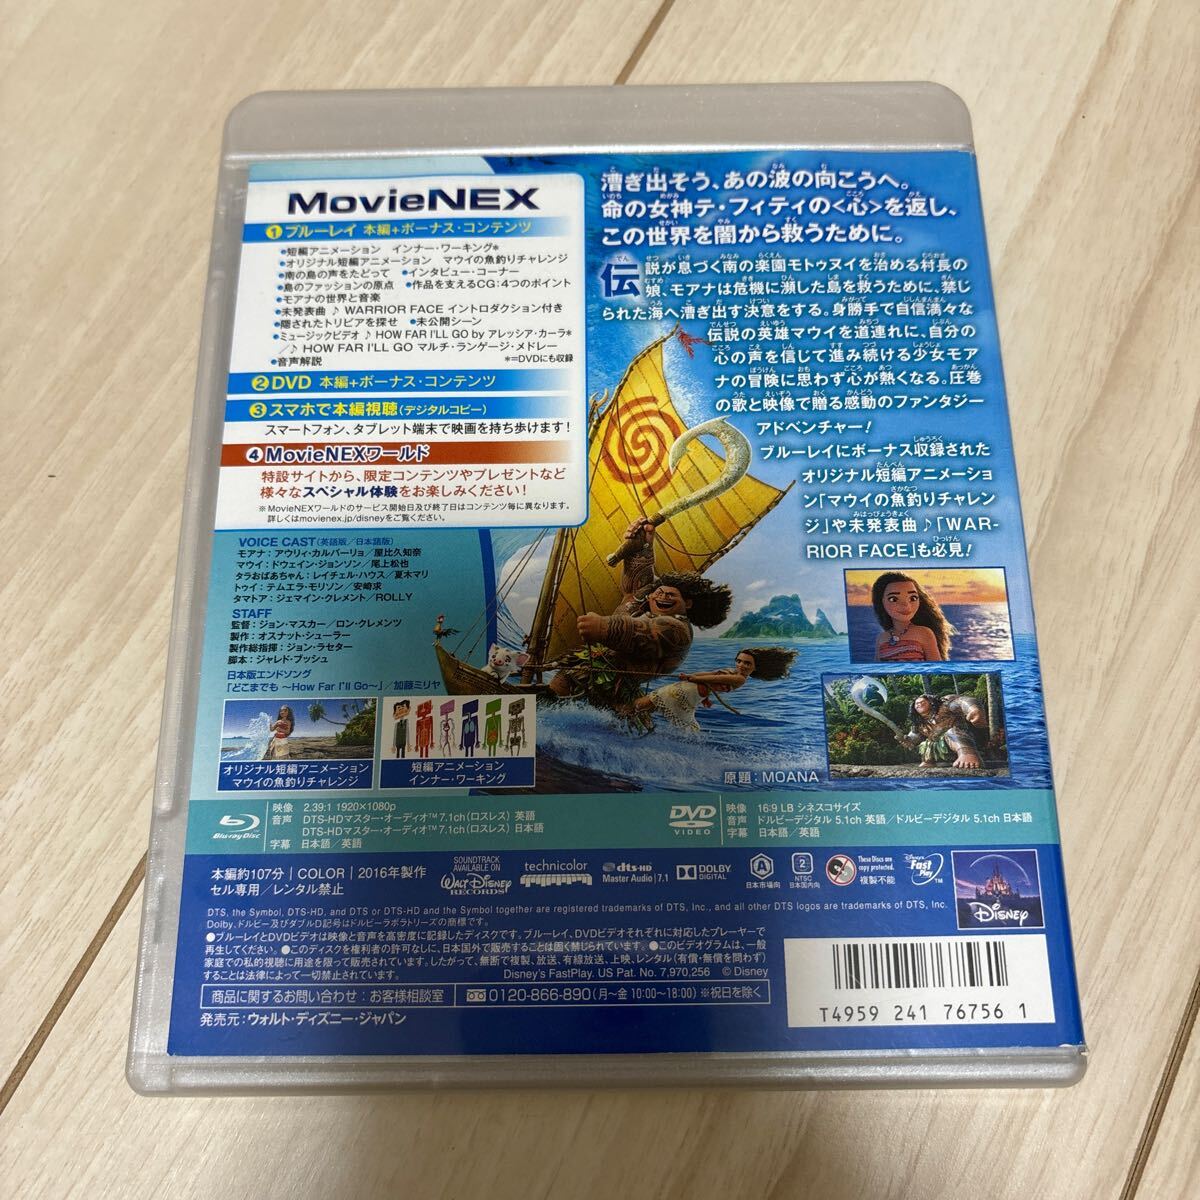 mo hole . legend. sea MovieNEX DVD Blu-ray Disney 